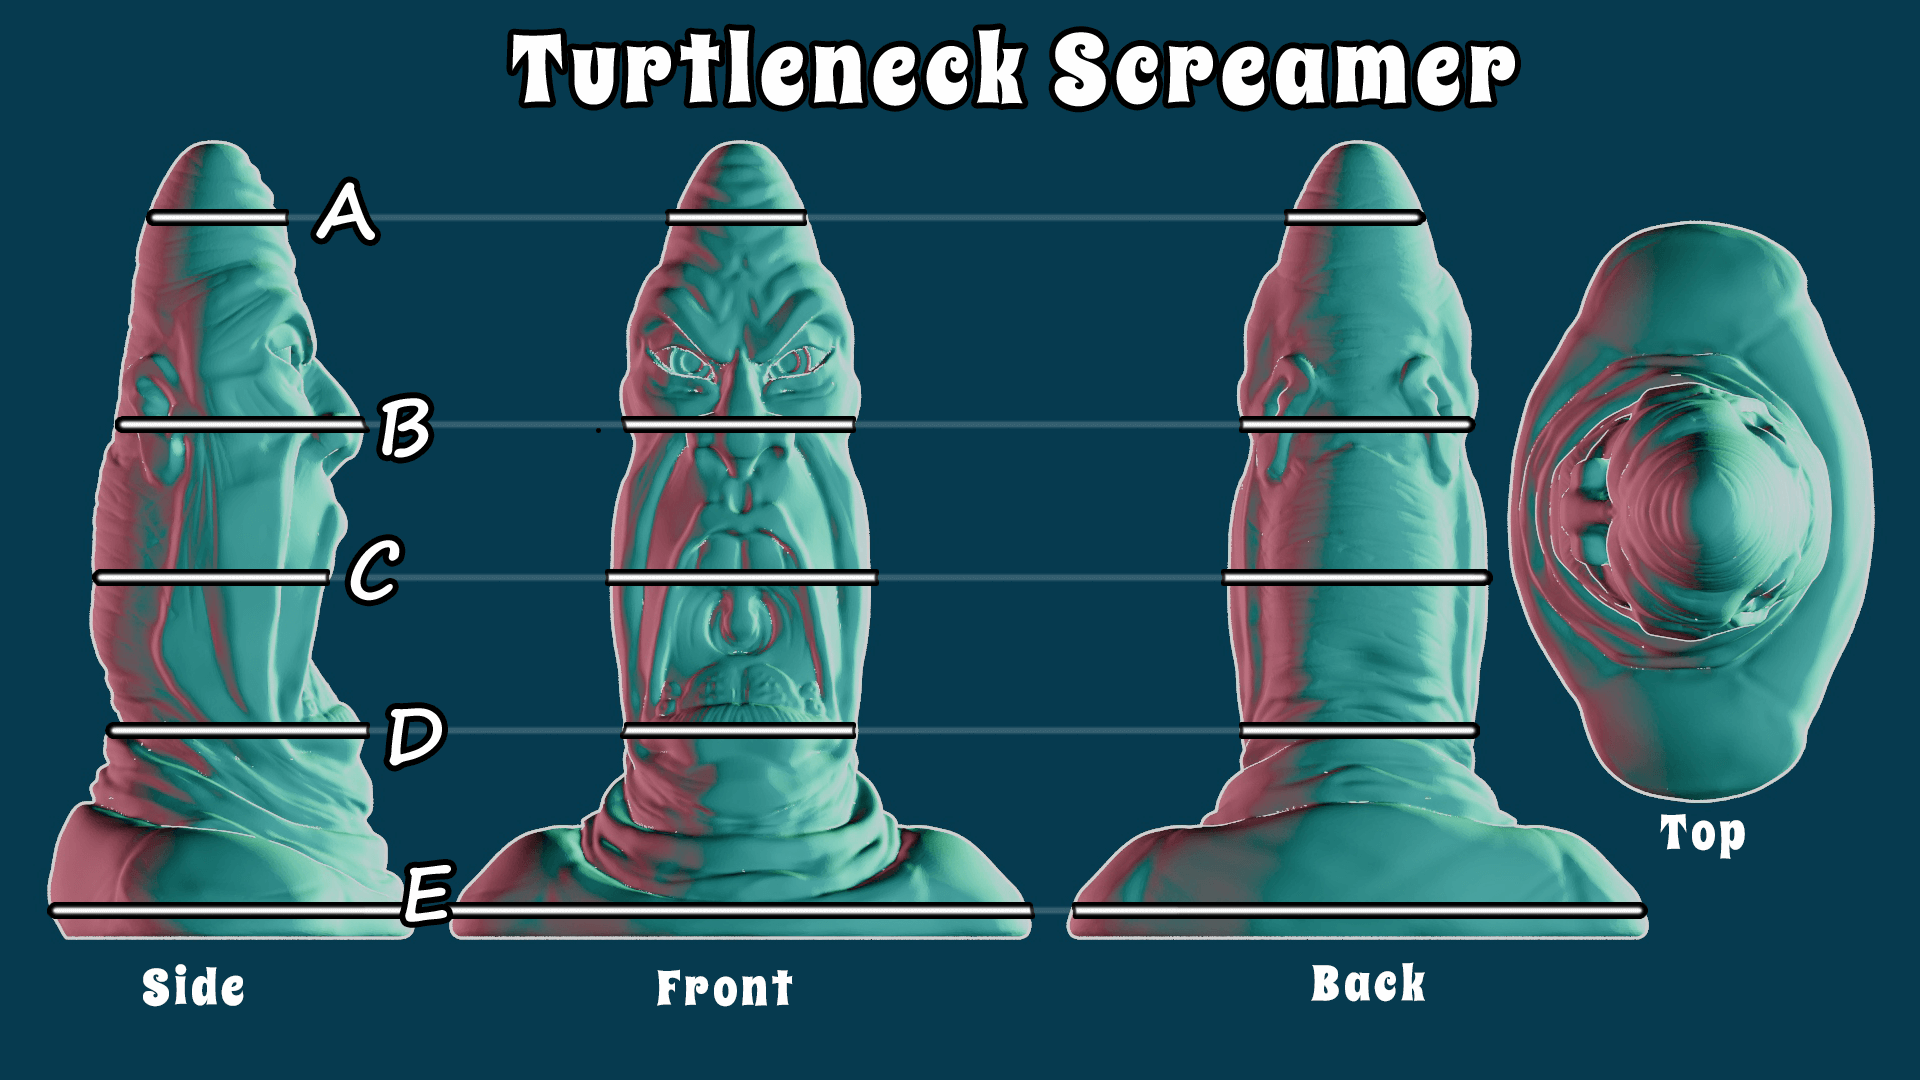 Turtleneck Screamer